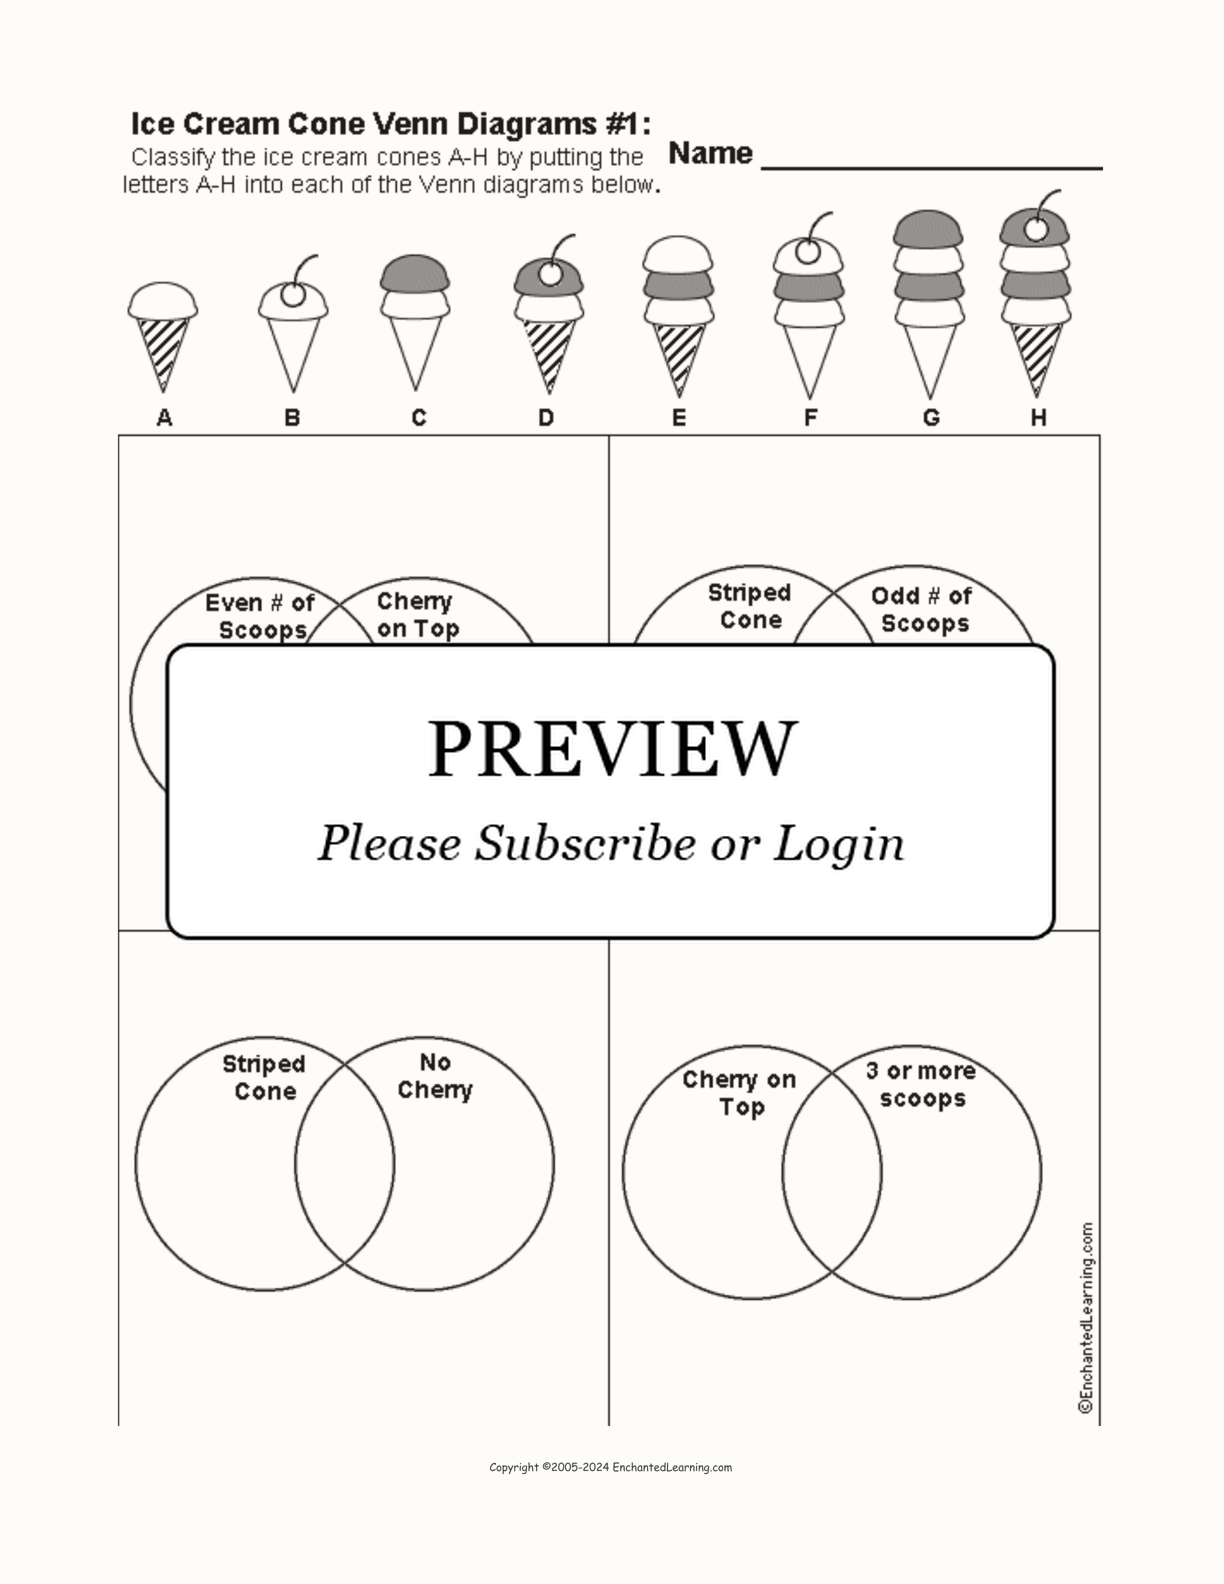 Ice Cream Cone Venn Diagram #1 interactive worksheet page 1